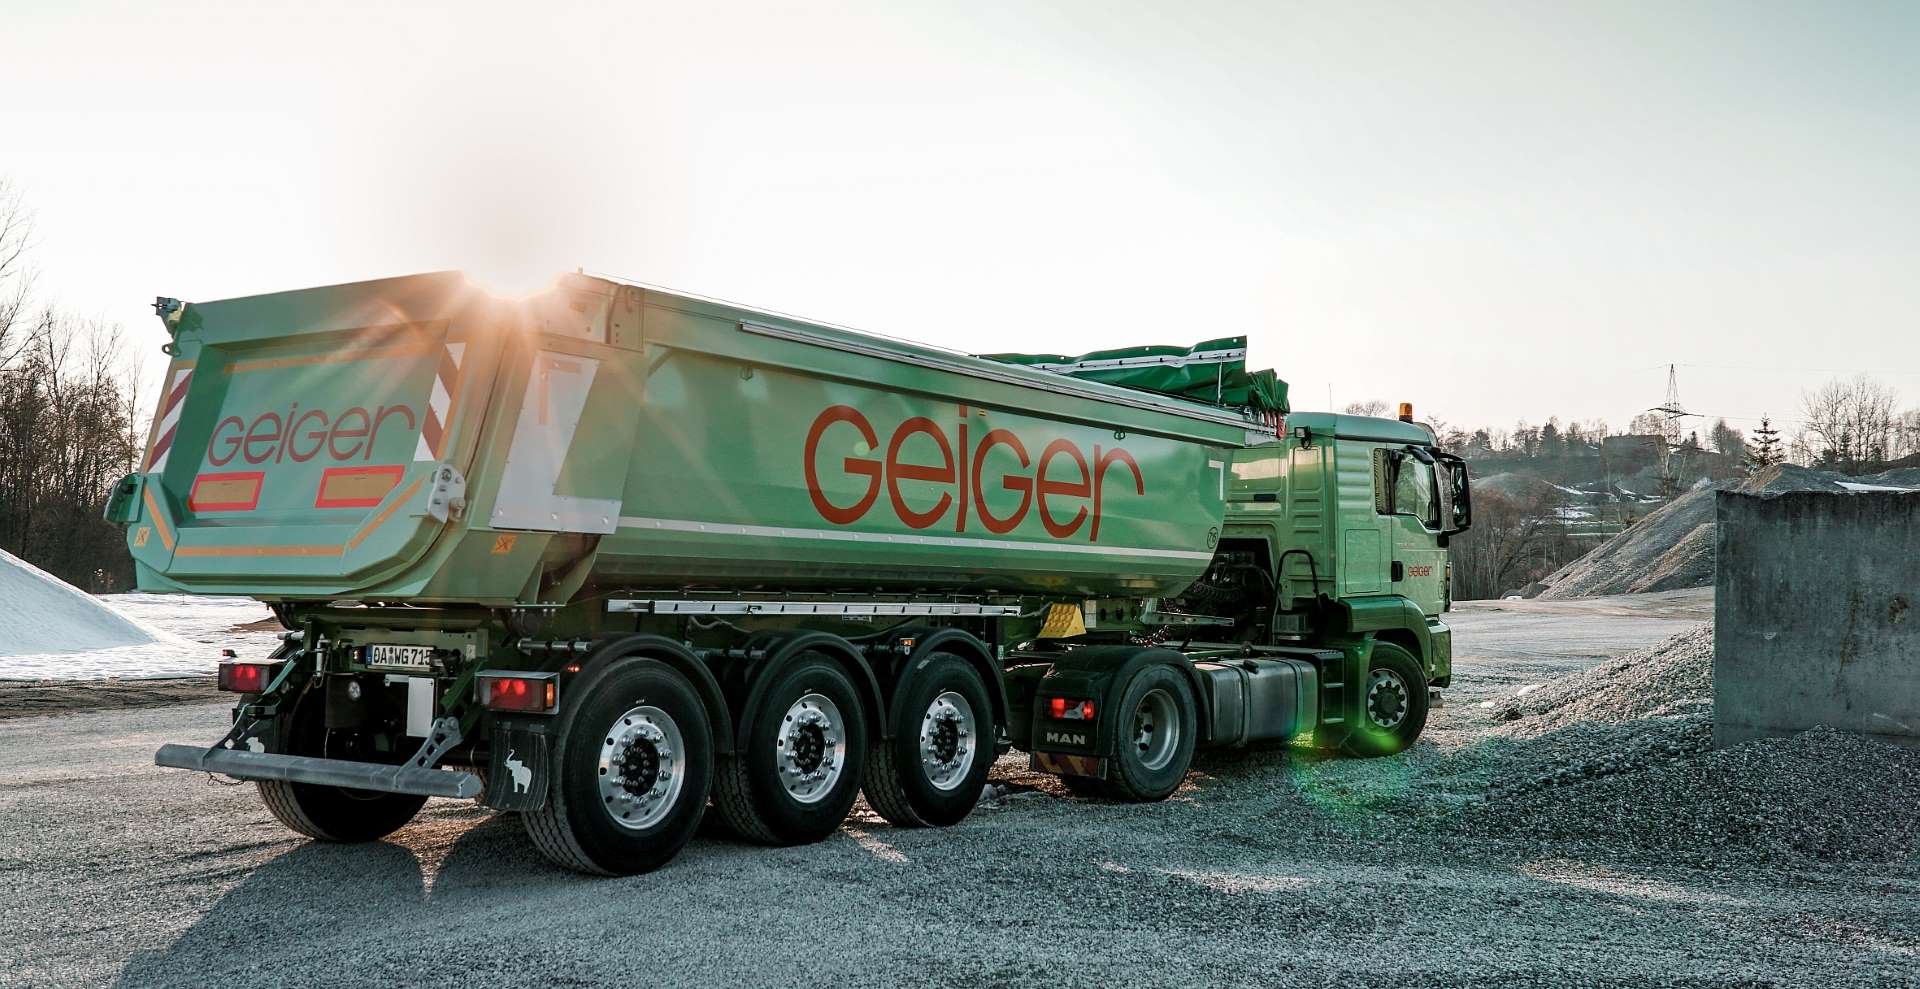 The Geiger company group in Oberstdorf tests Schmitz Cargobull prototypes